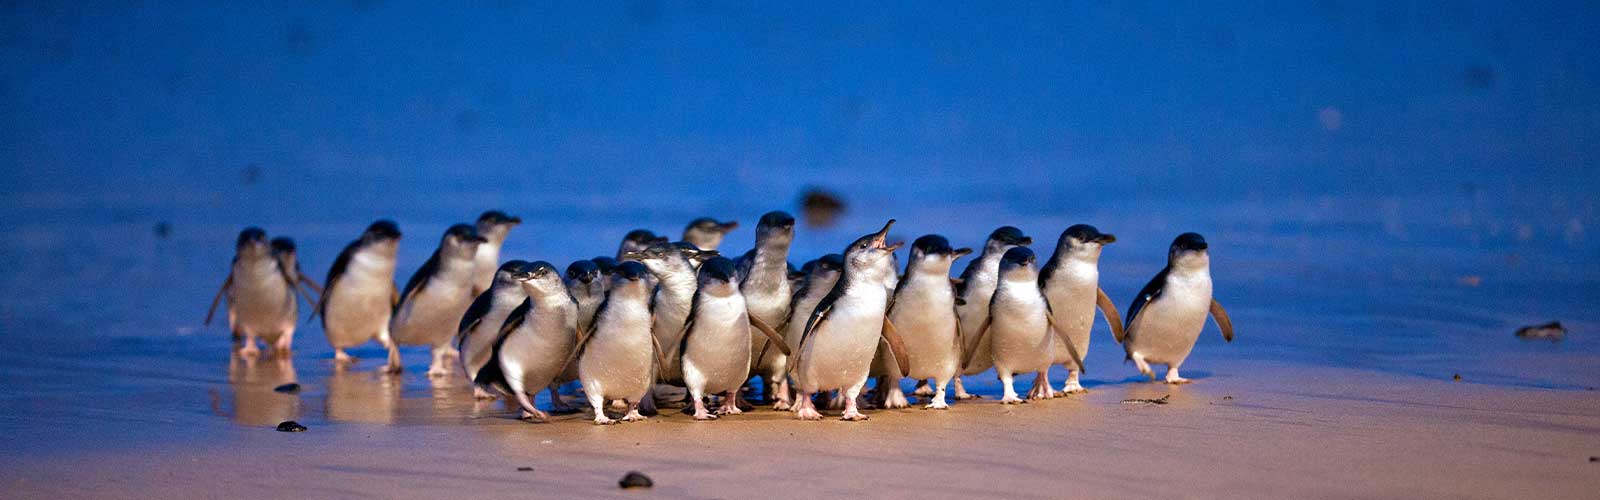 penguin parade attractions hero